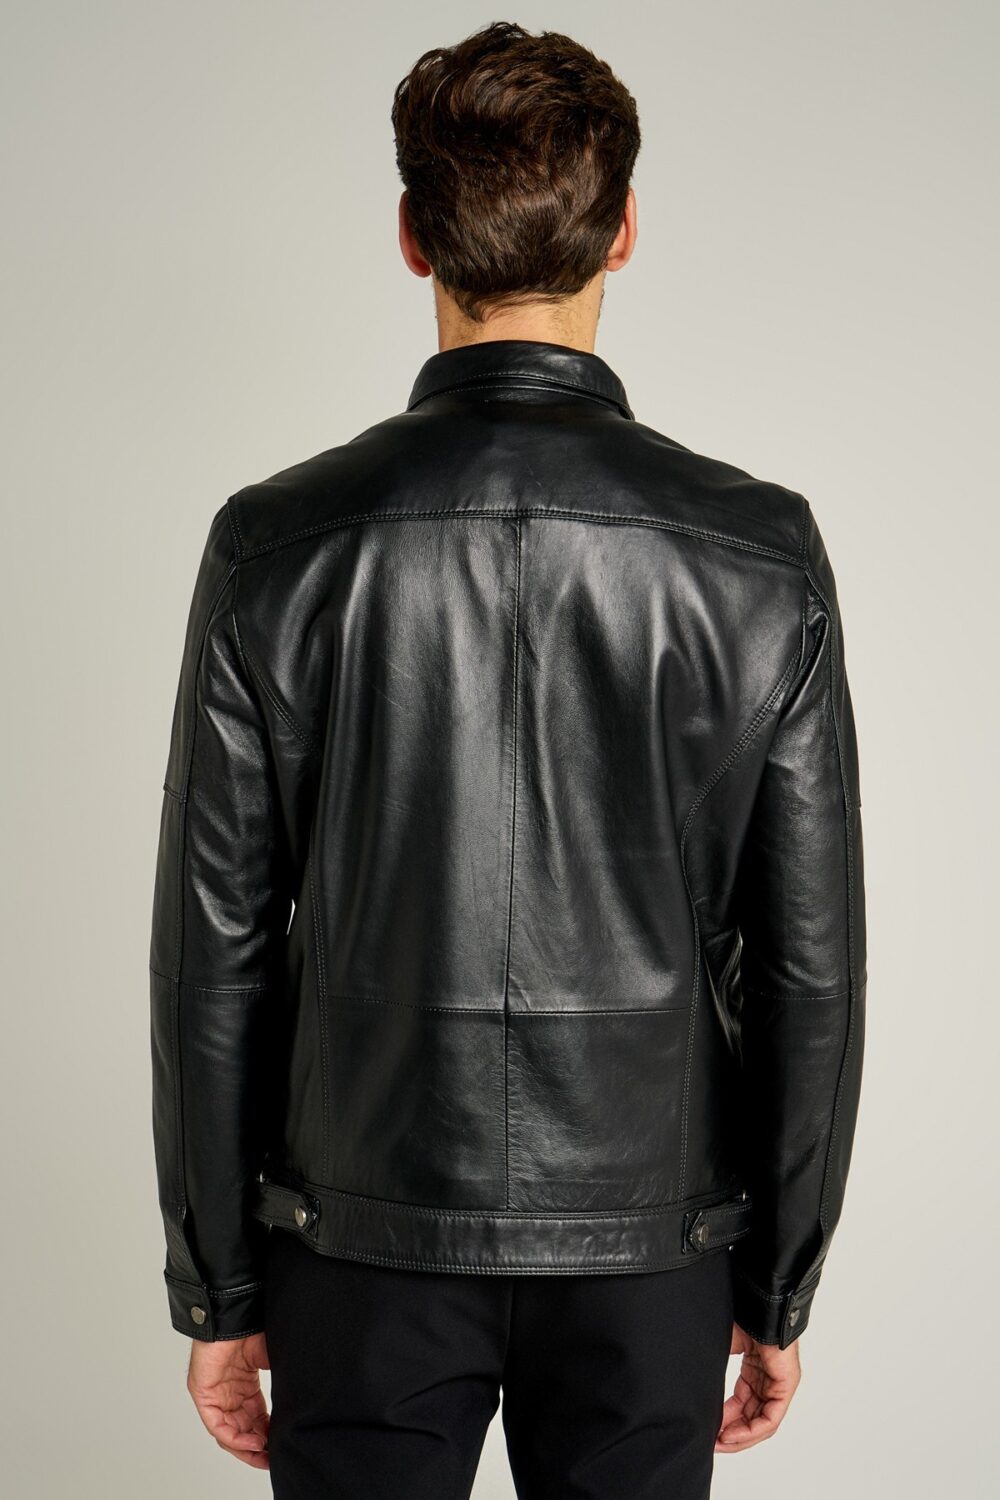 Oscar Black Men's Biker Style Leather Jacket | Urban Fashion